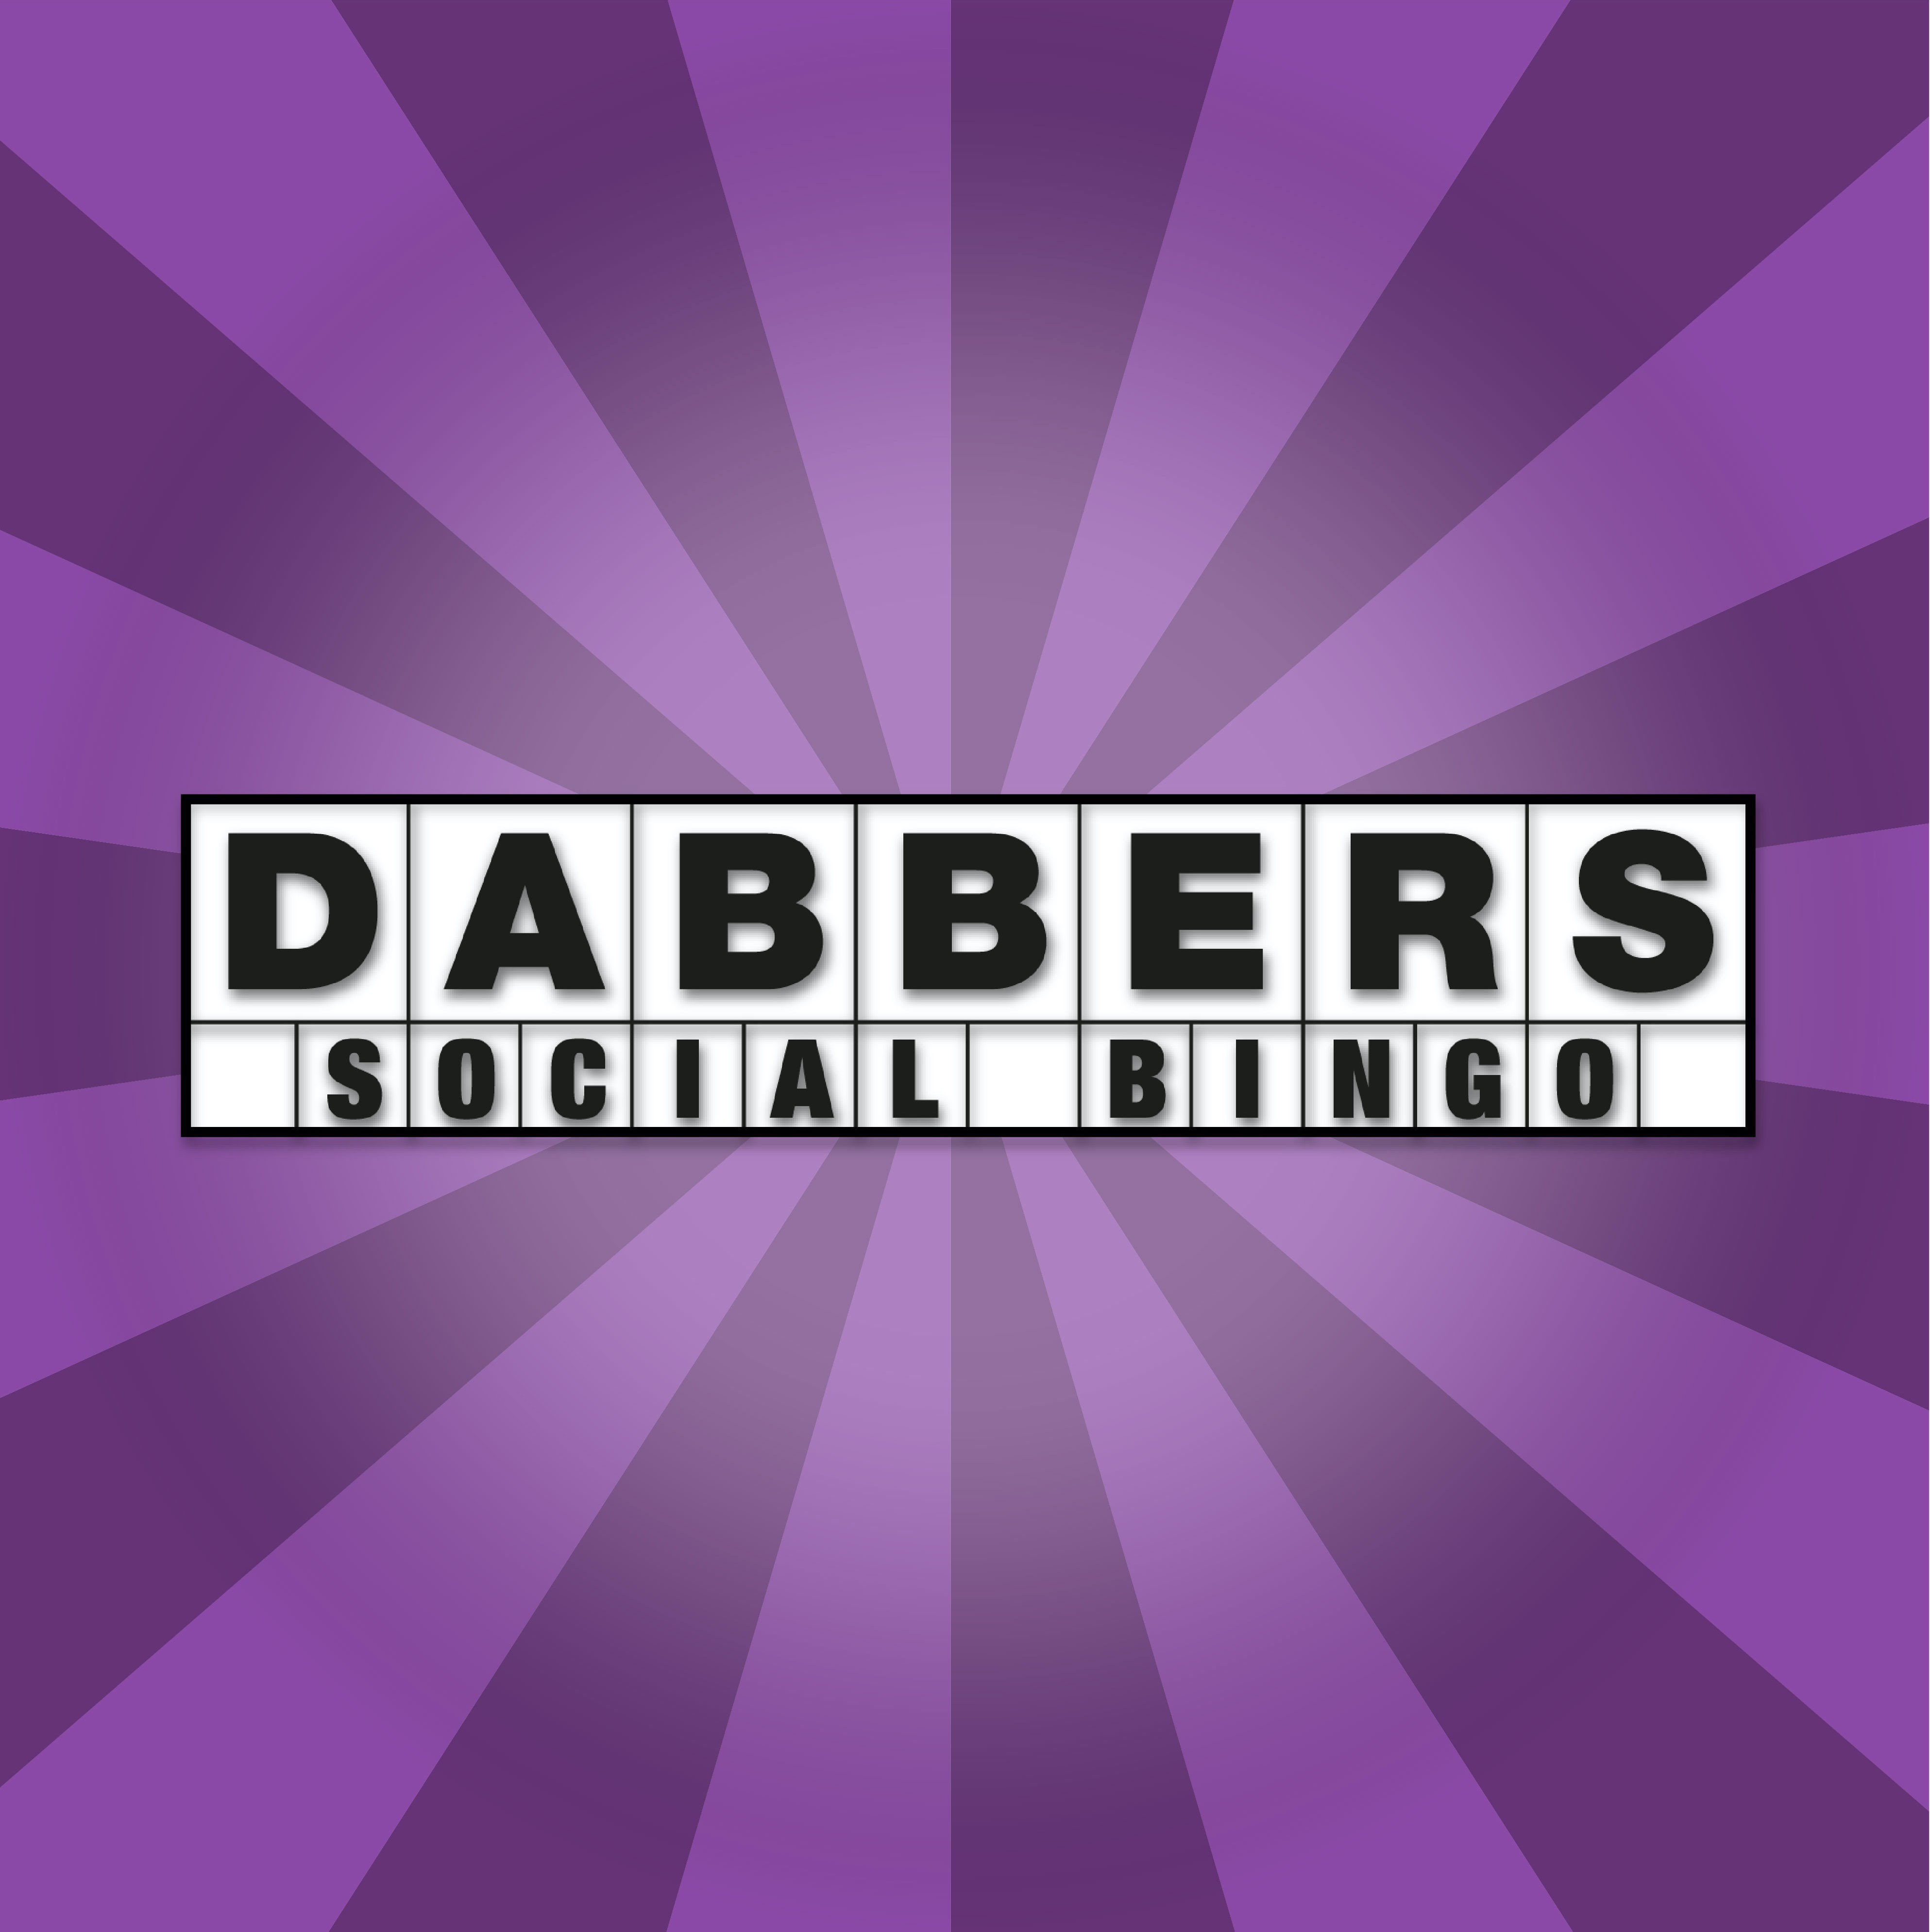 Dabbers Social Bingo at FarGo Village